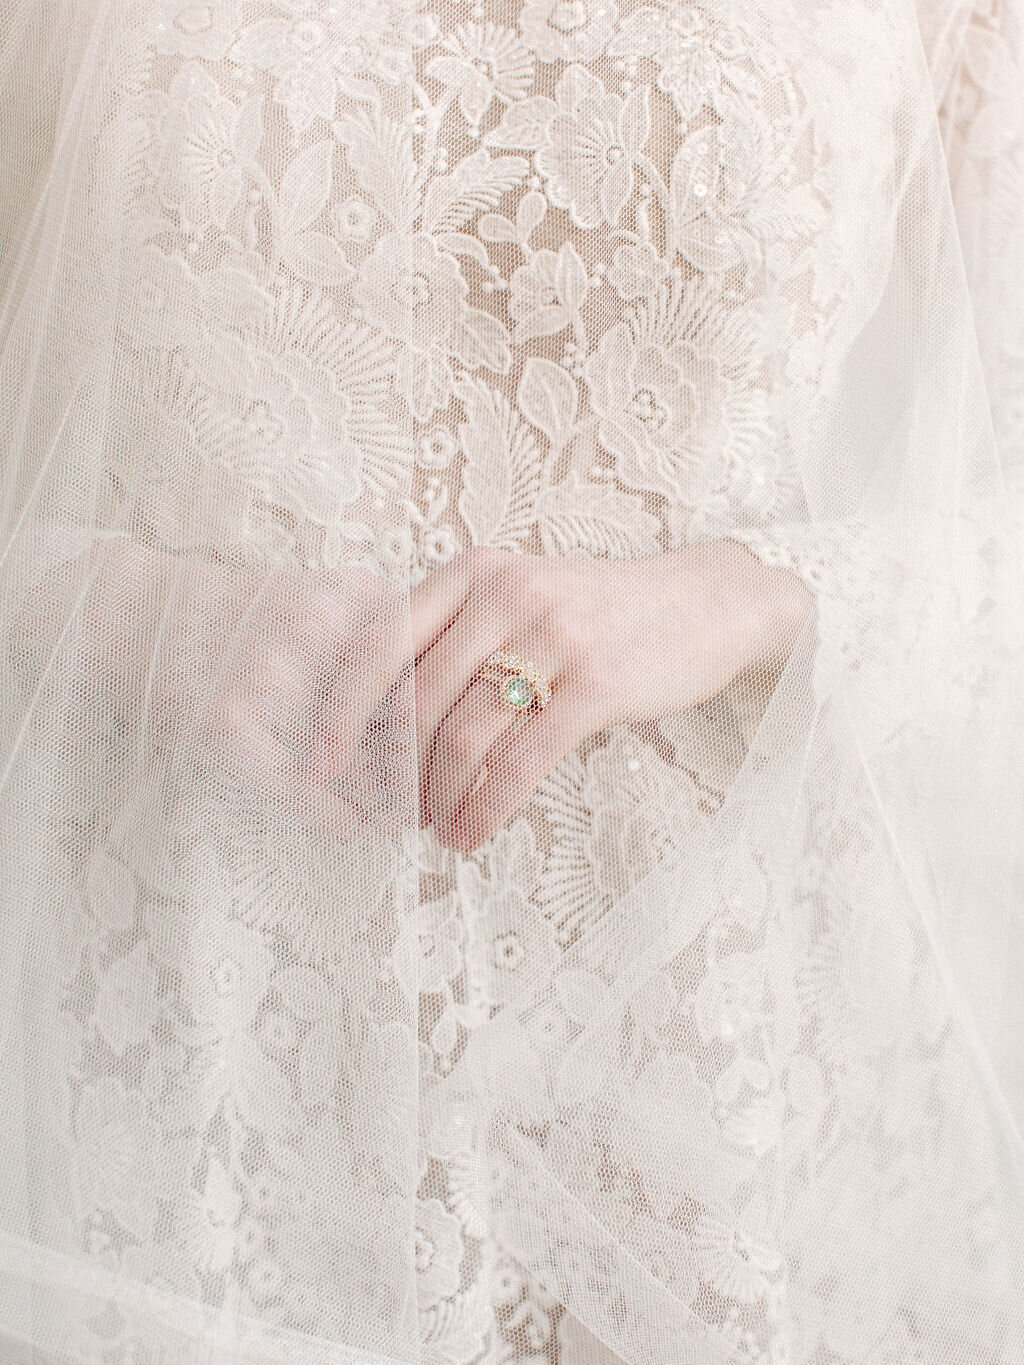 max-owens-design-christmas-wedding-06-engagement-ring-veil